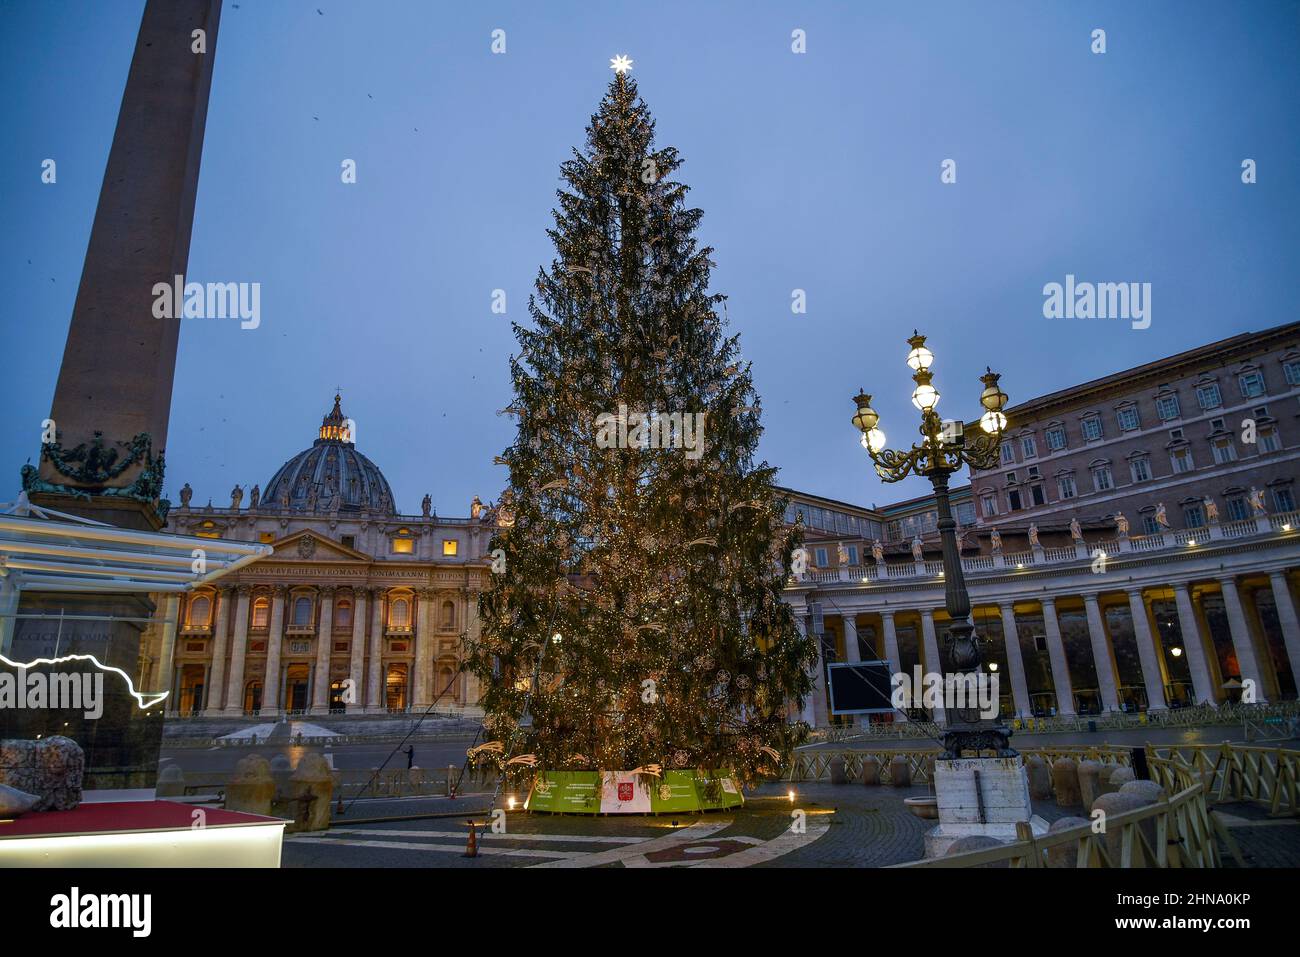 Italy, Rome, December 25th, 2020. The Vatican's traditional Christmas tree    Photo © Fabio Mazzarella/Sintesi/Alamy Stock Photo Stock Photo